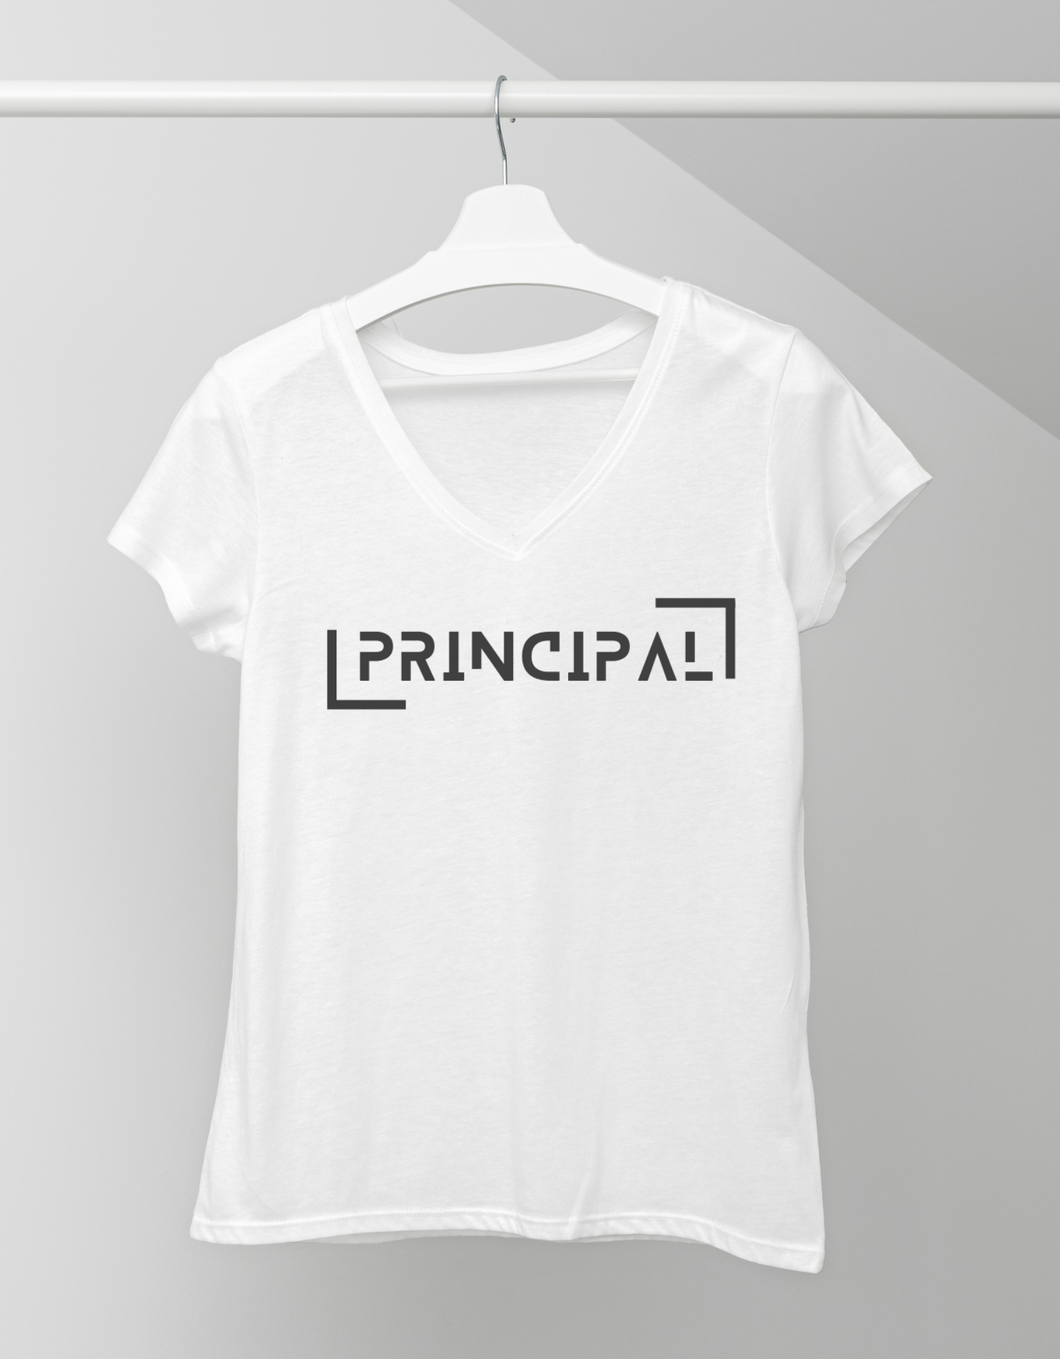 Principal Retro Shirt